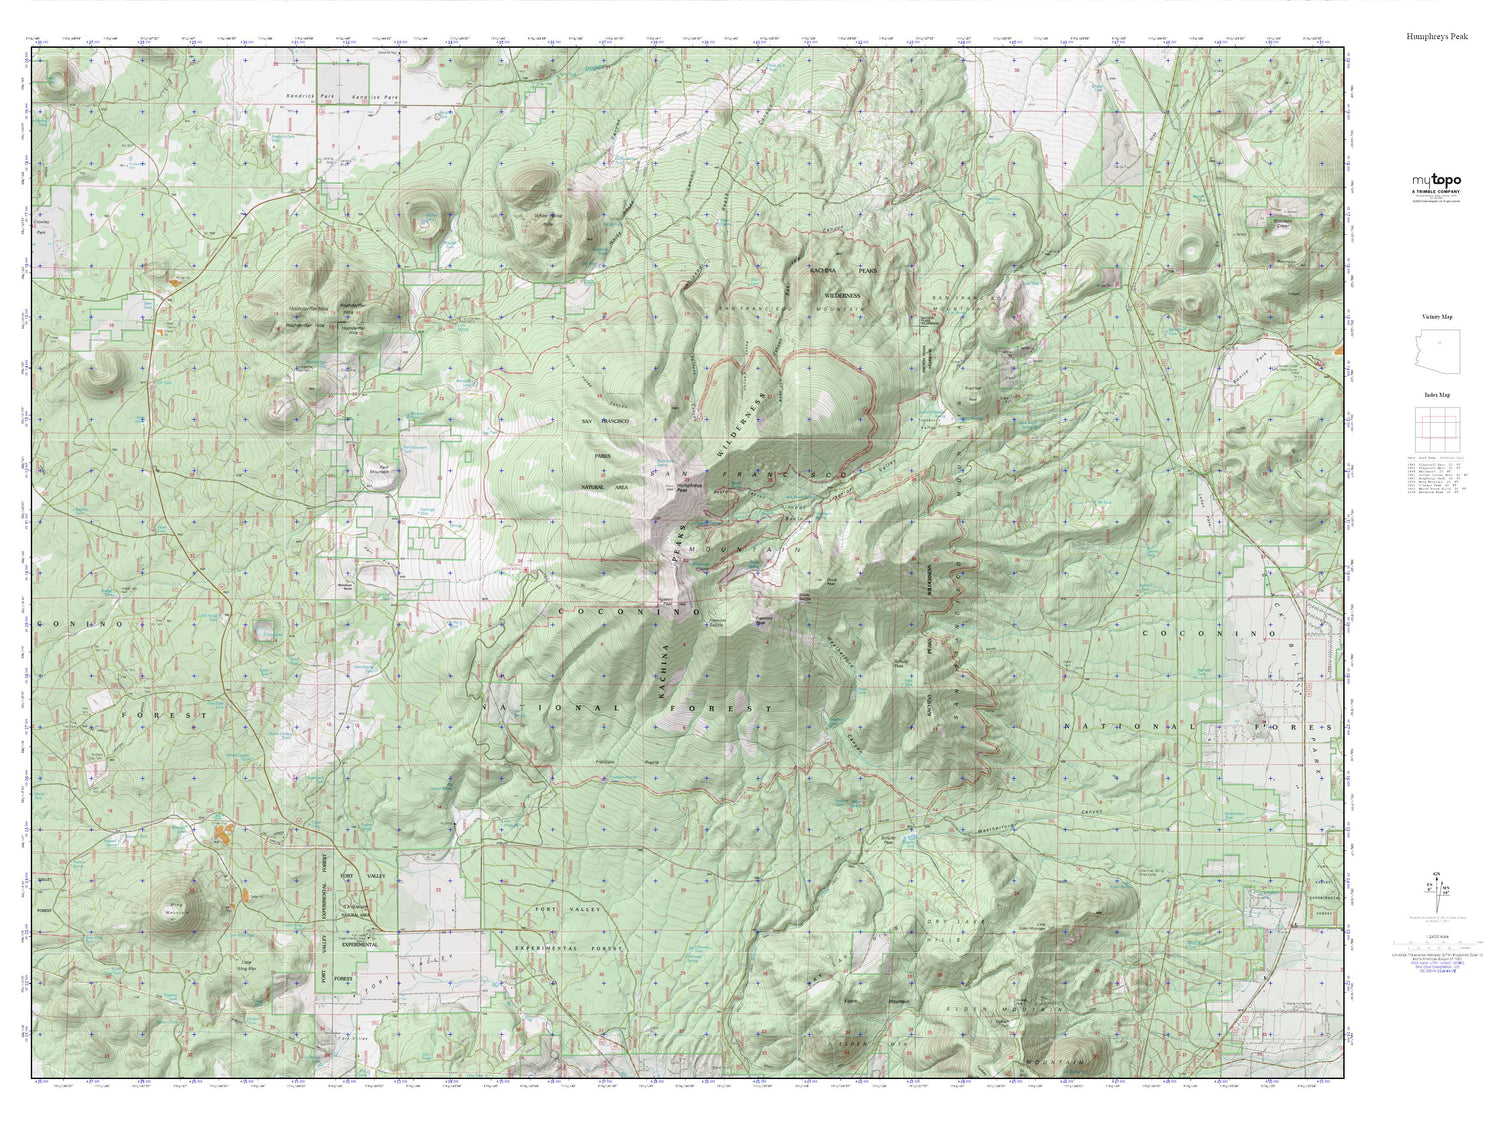 Humphreys Peak MyTopo Explorer Series Map Image